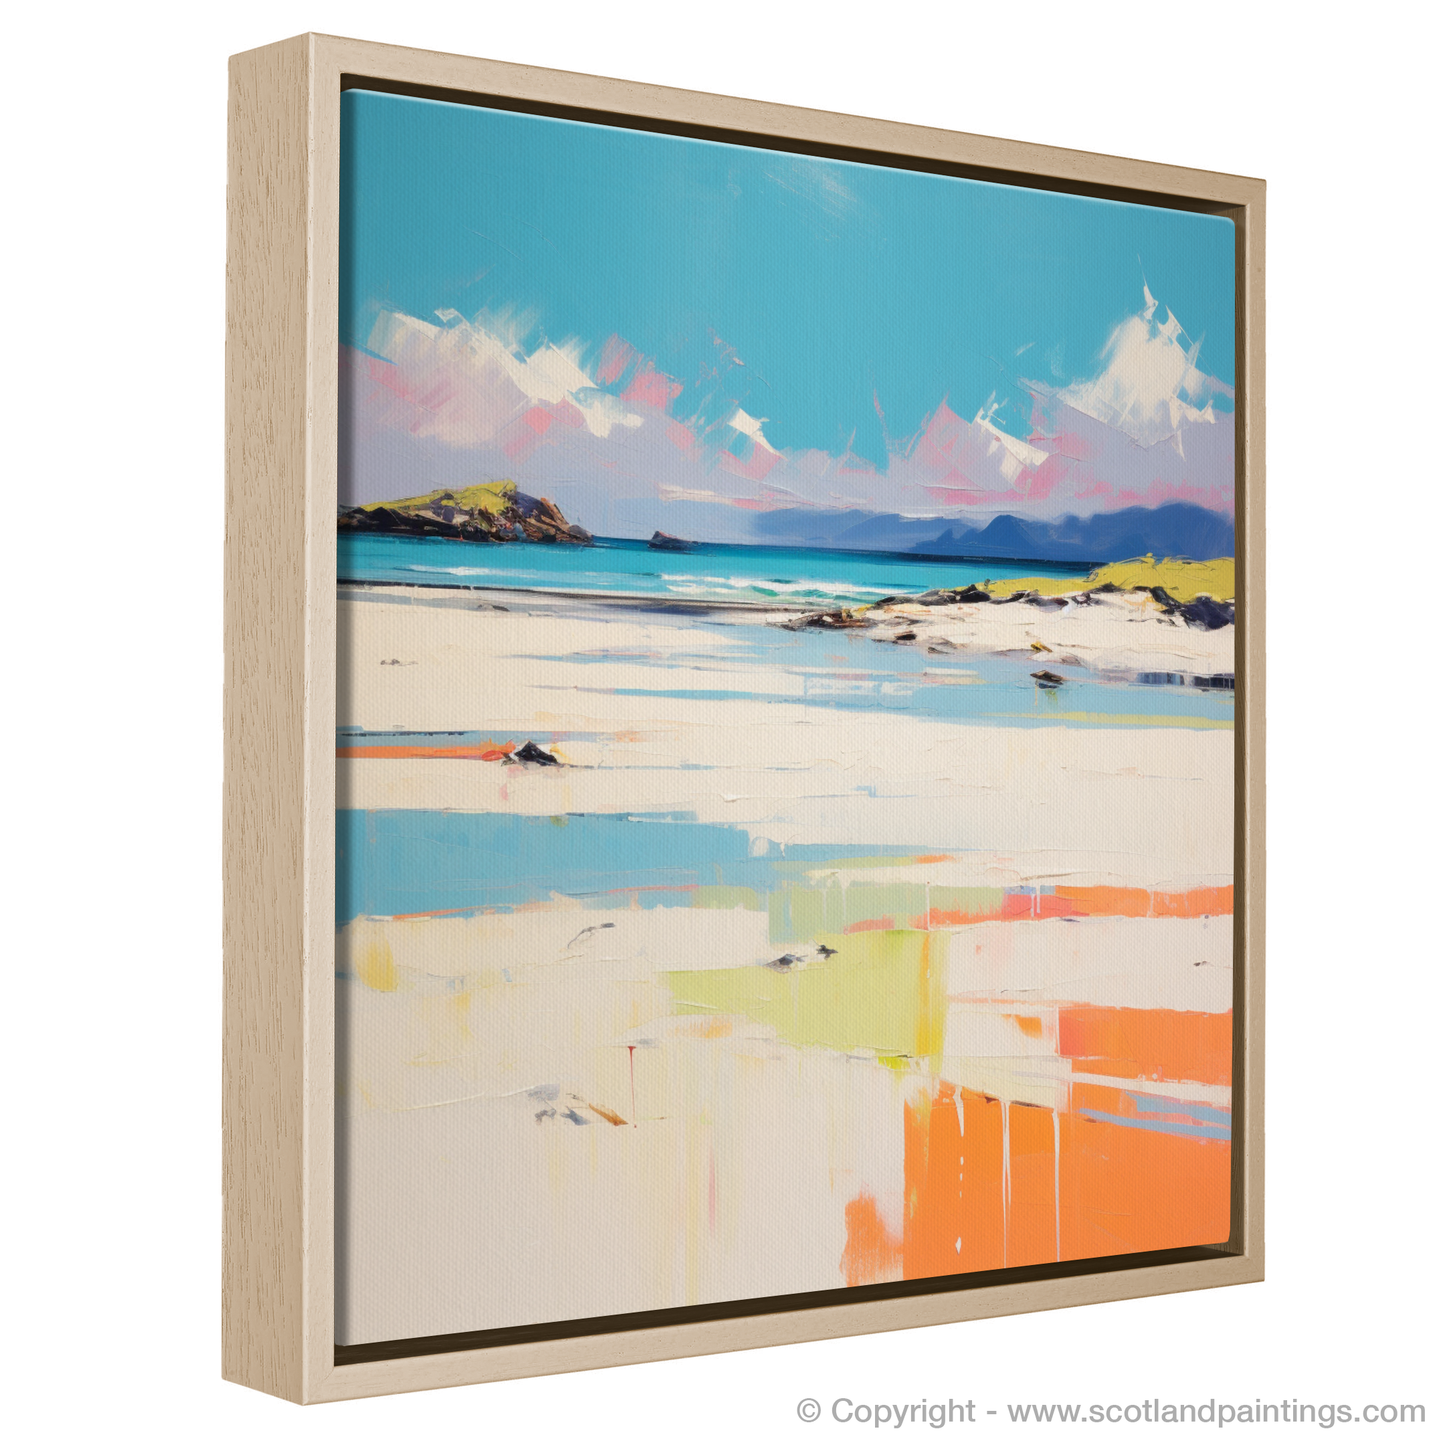 Painting and Art Print of Camusdarach Beach, Arisaig entitled "Camusdarach Beach: A Contemporary Ode to Scotland's Seaside Splendour".